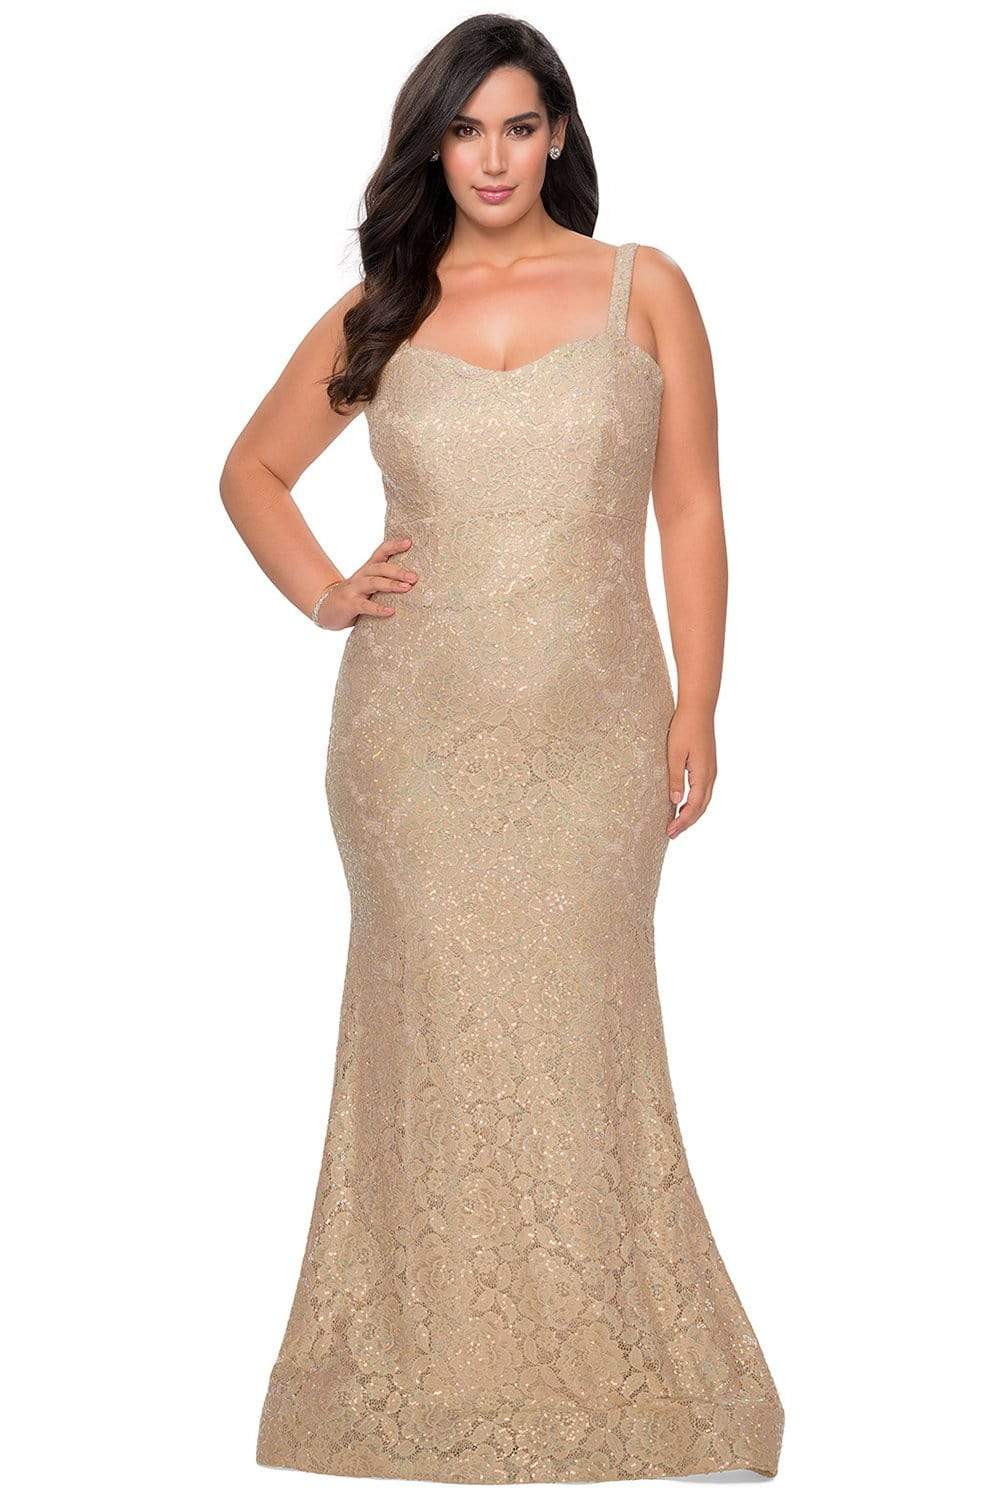 Image of La Femme - 28798 Rhinestone Embellished Sweetheart Simple Prom Dress